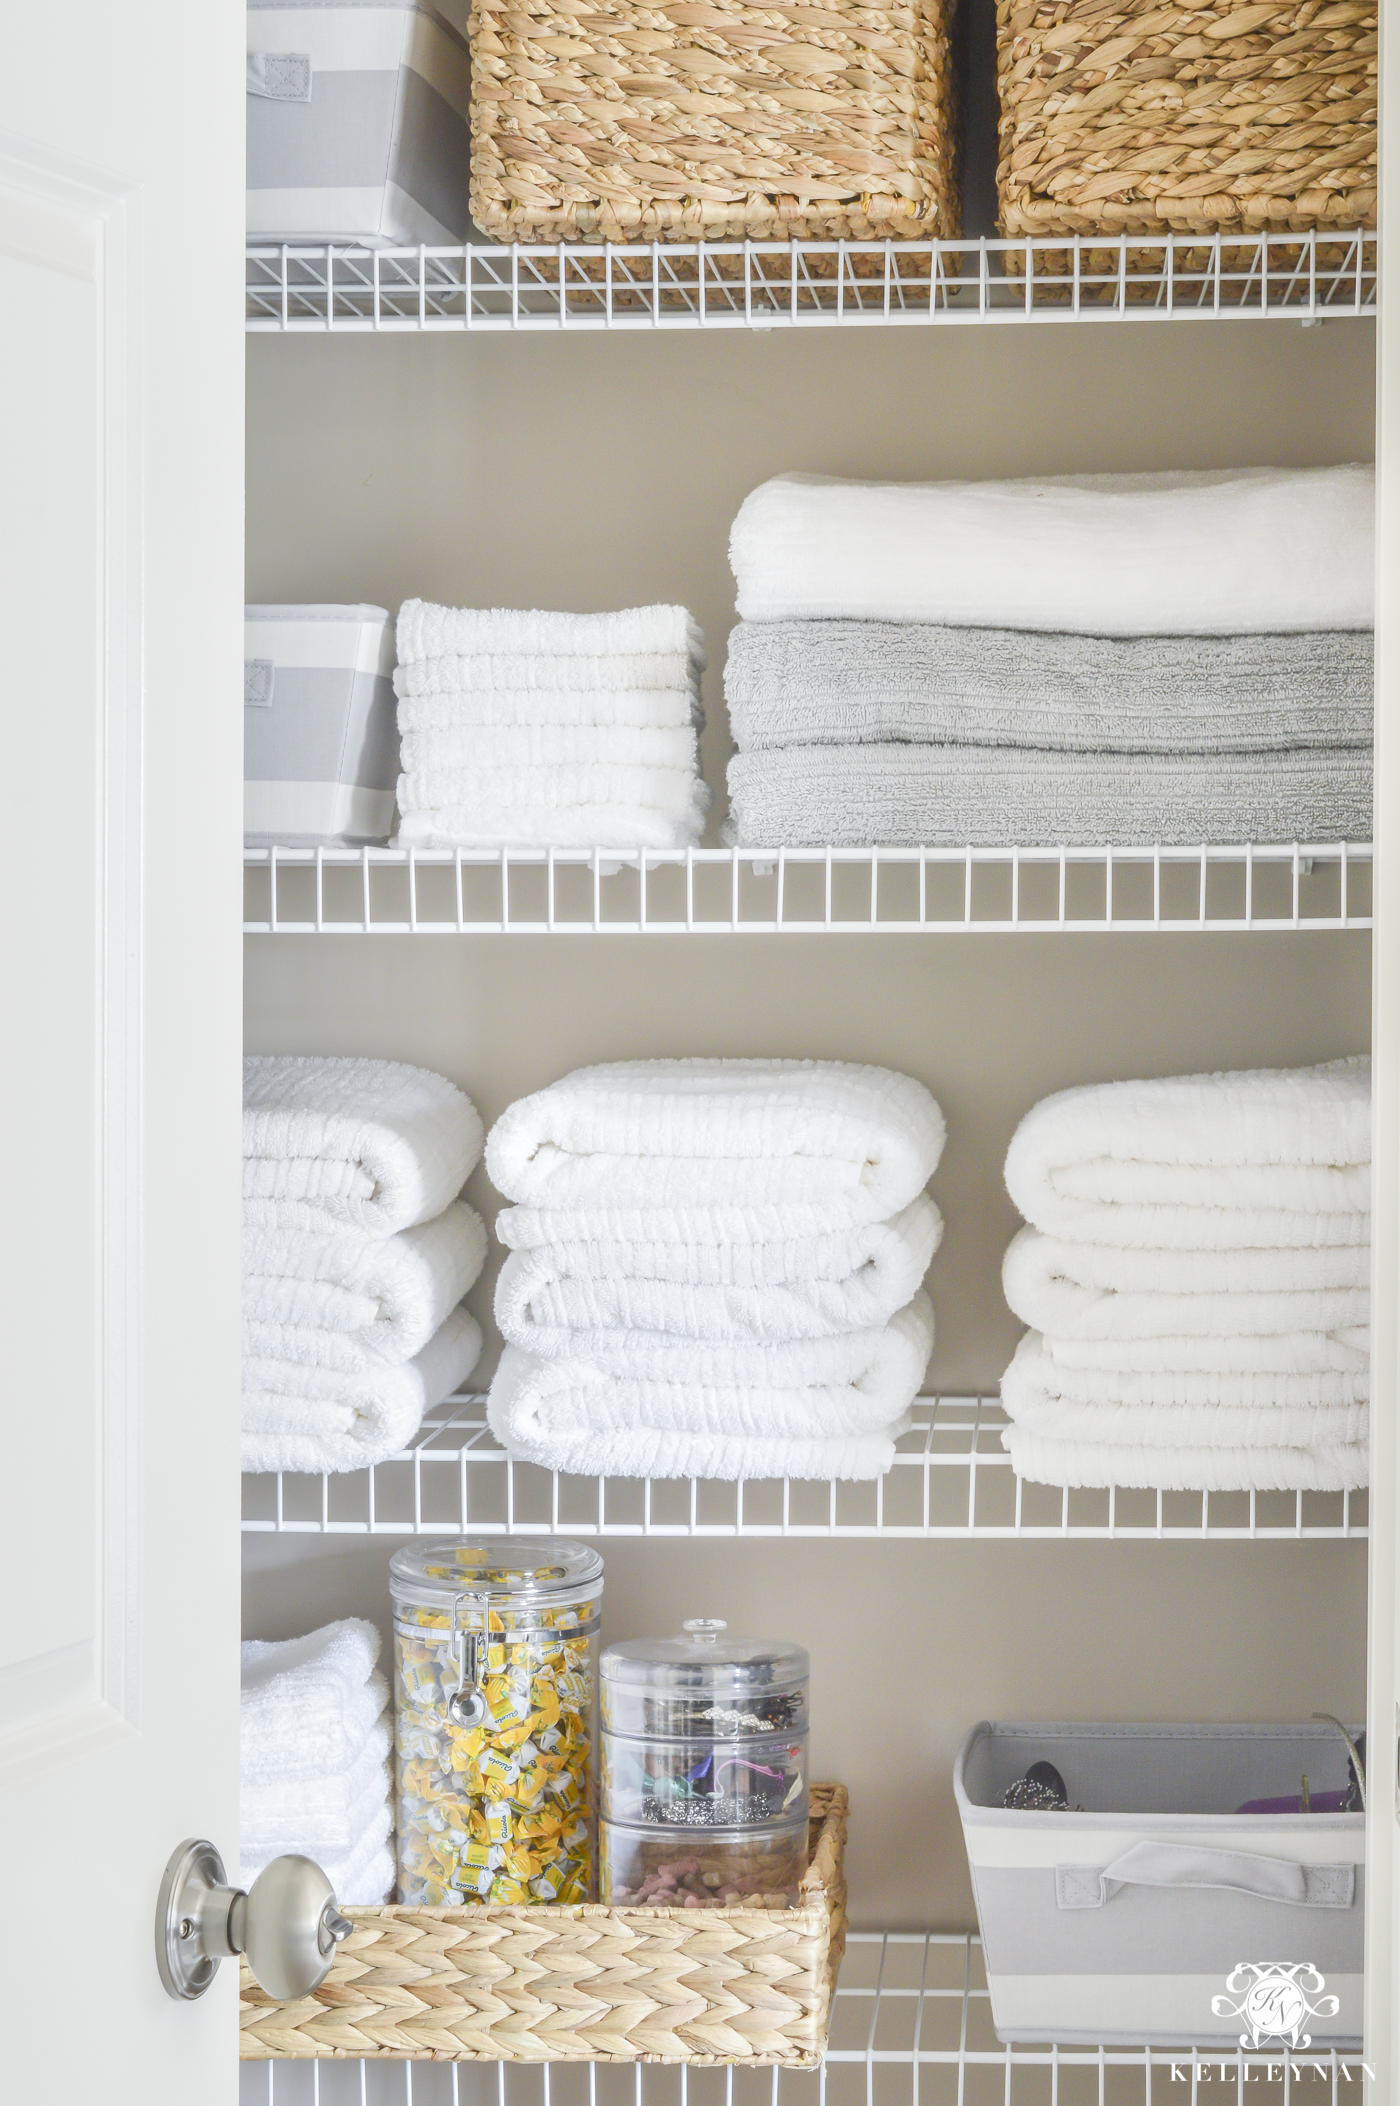 Small Laundry Room Organization Ideas - Kelley Nan